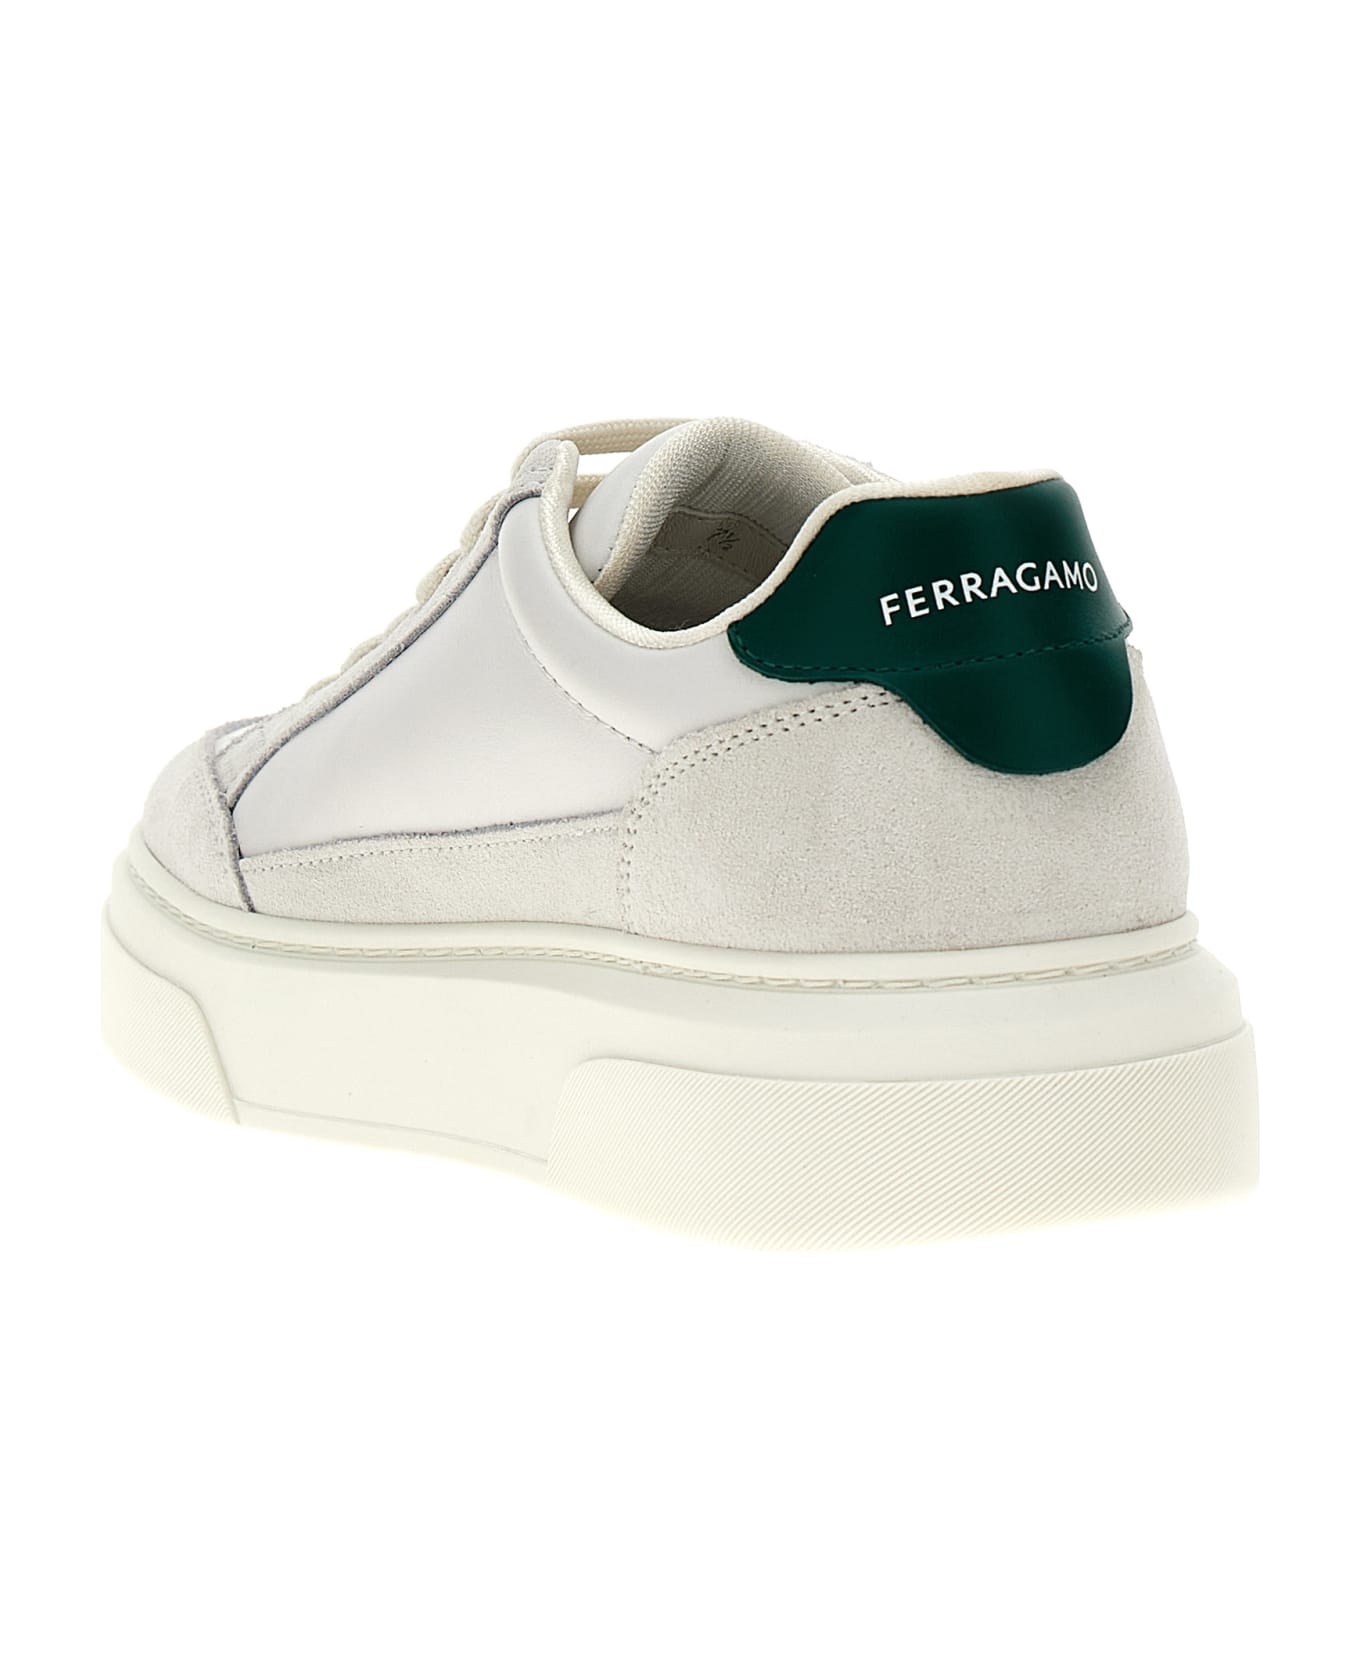 Ferragamo 'cassina' Sneakers - Green